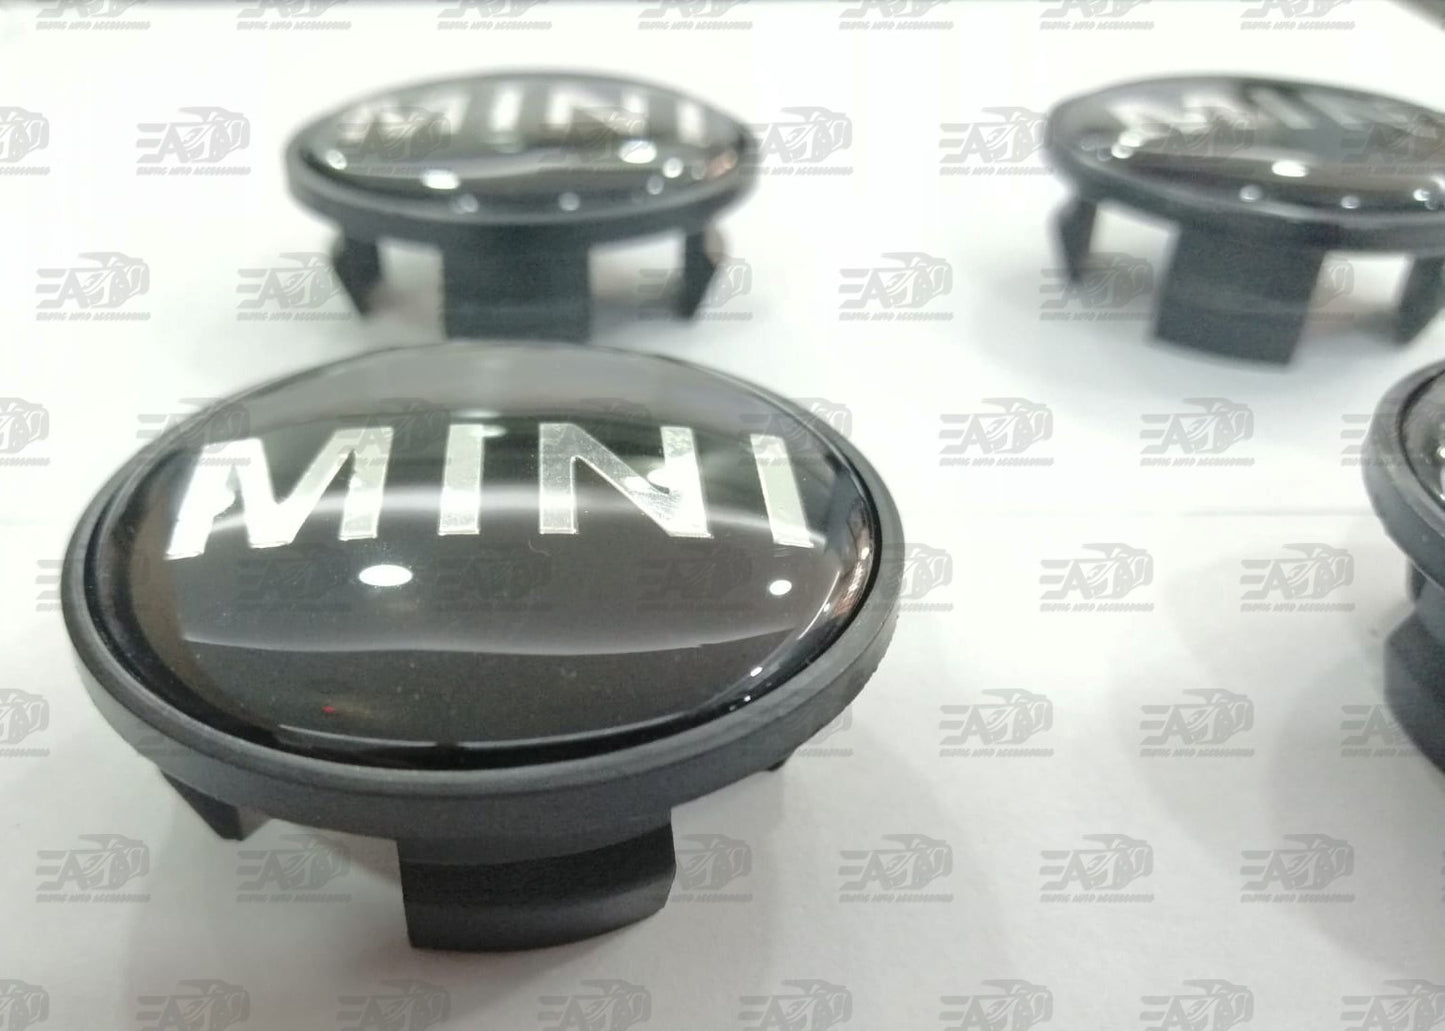 Mini Cooper gloss black center caps set 4 piece 54mm